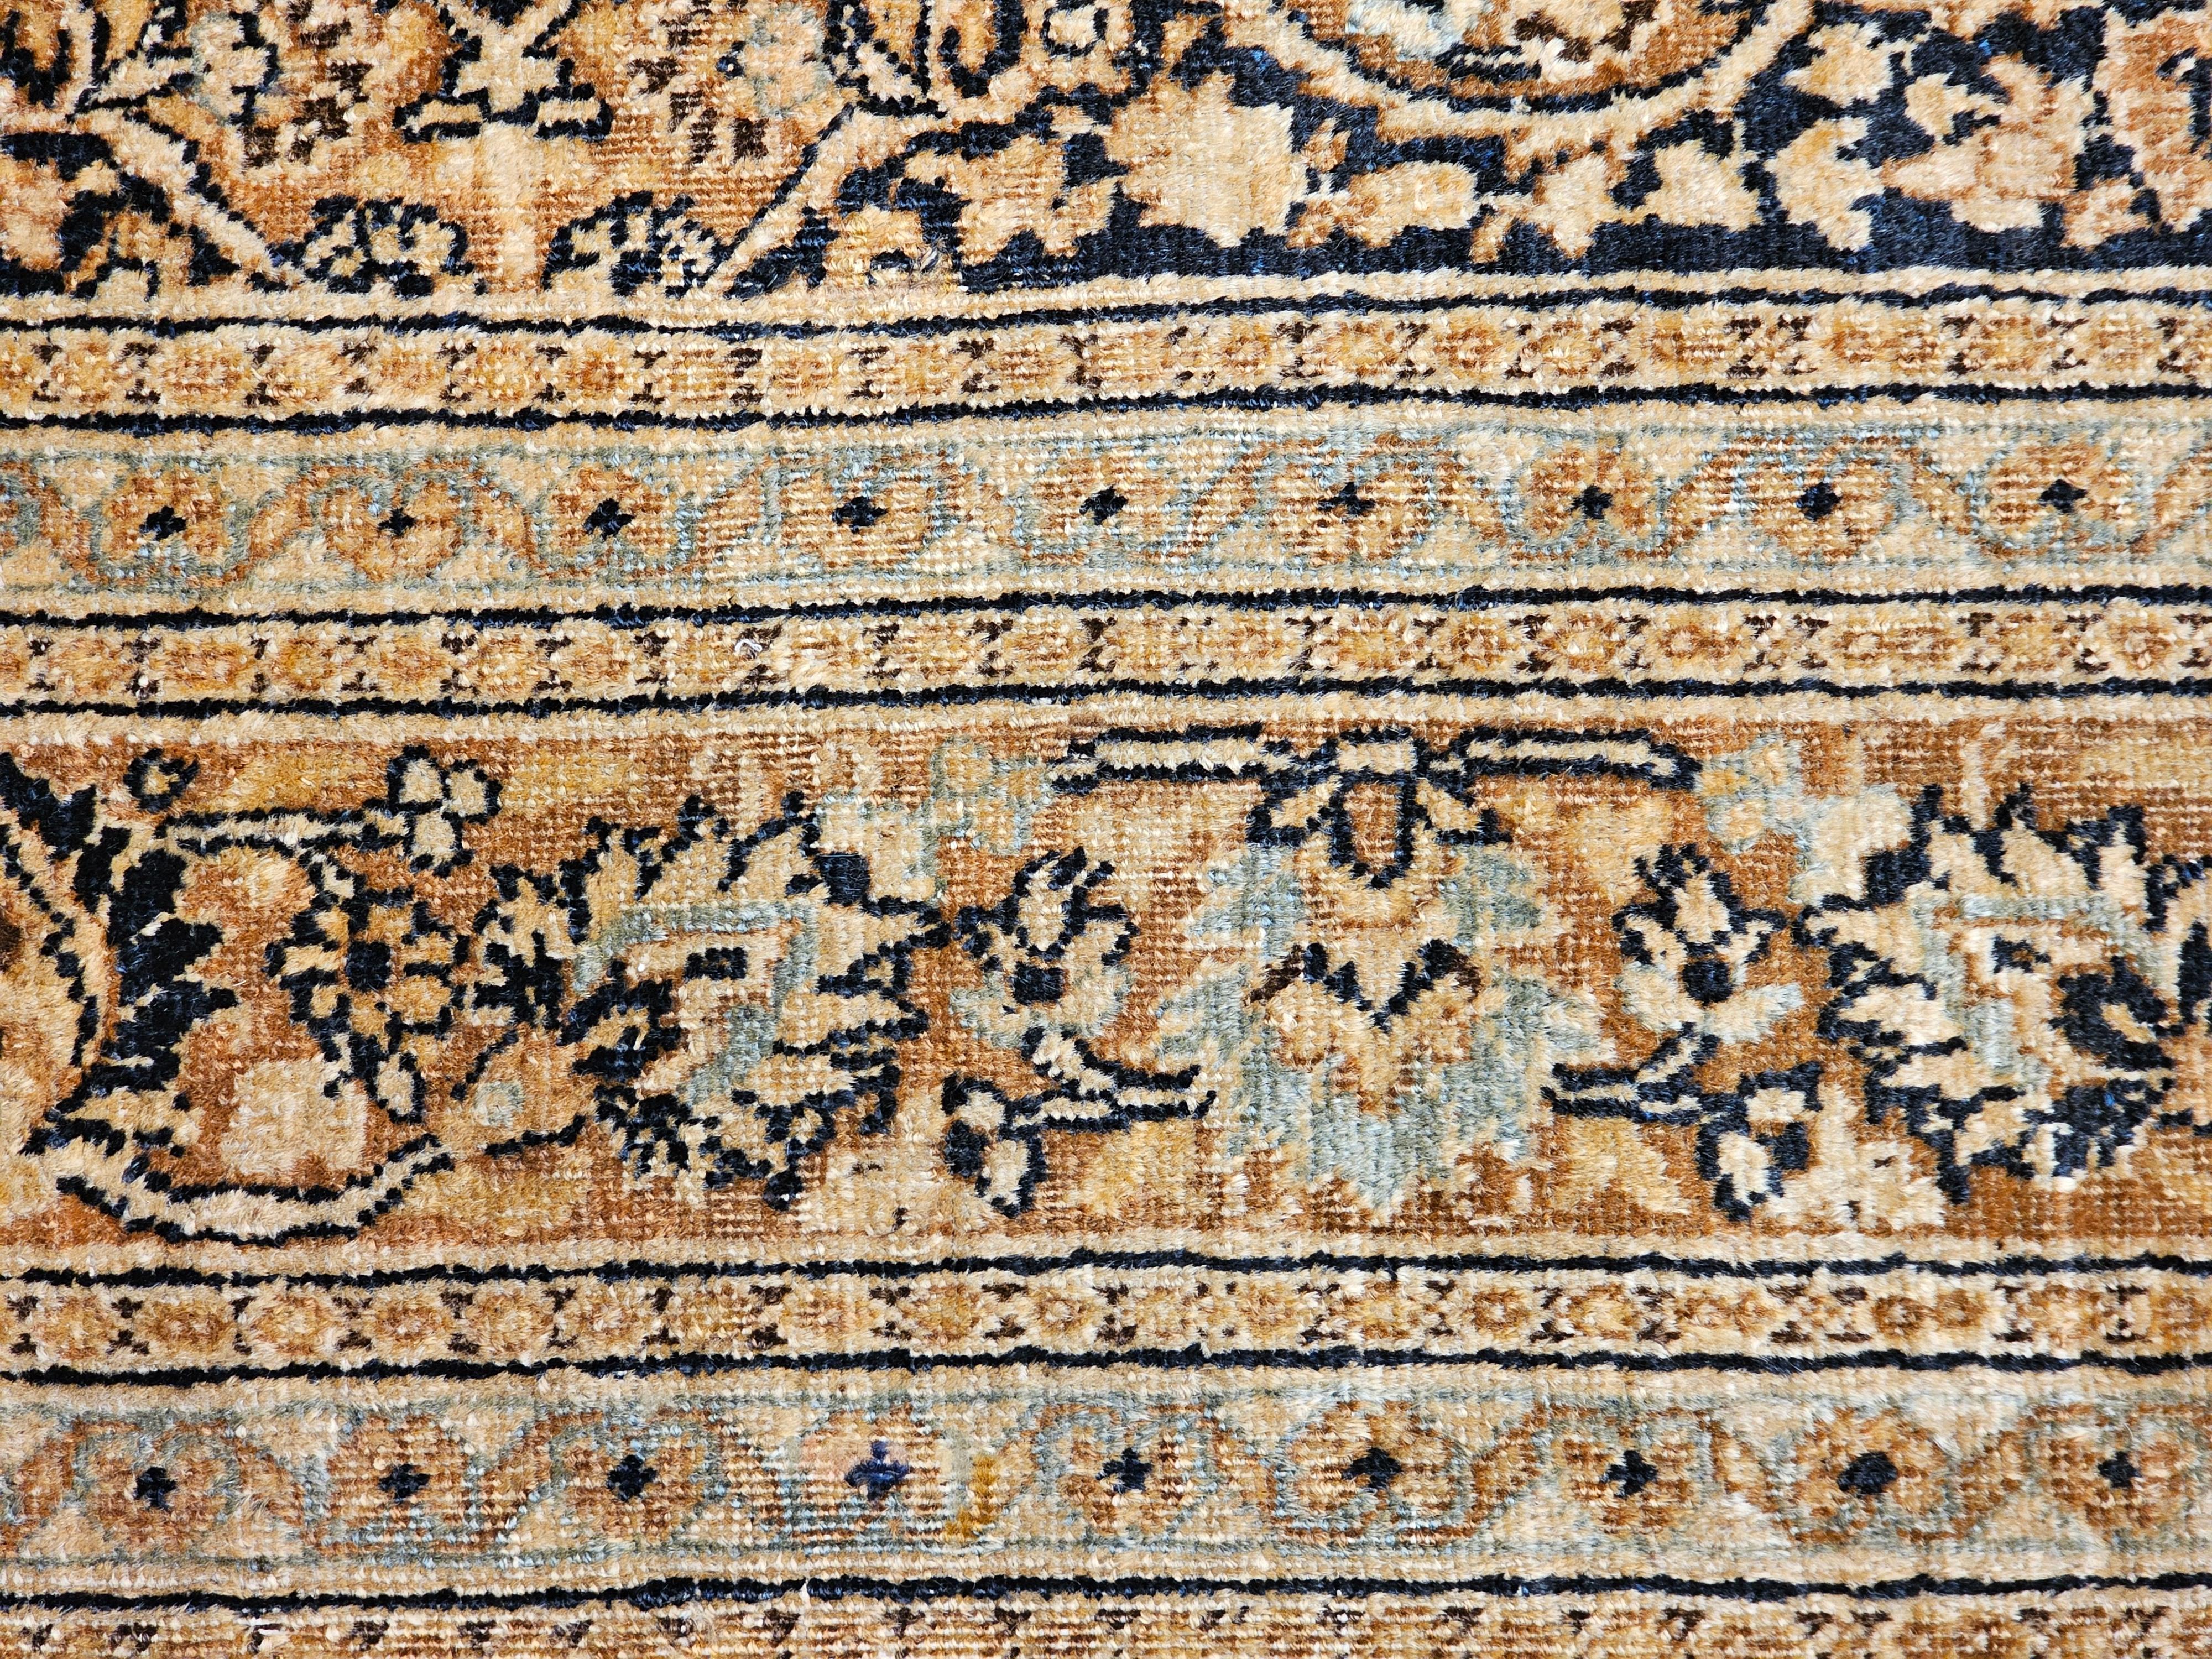 Vintage Persian Tabriz in Allover Floral Pattern in Dark Navy/Black, Gold, Blue 2